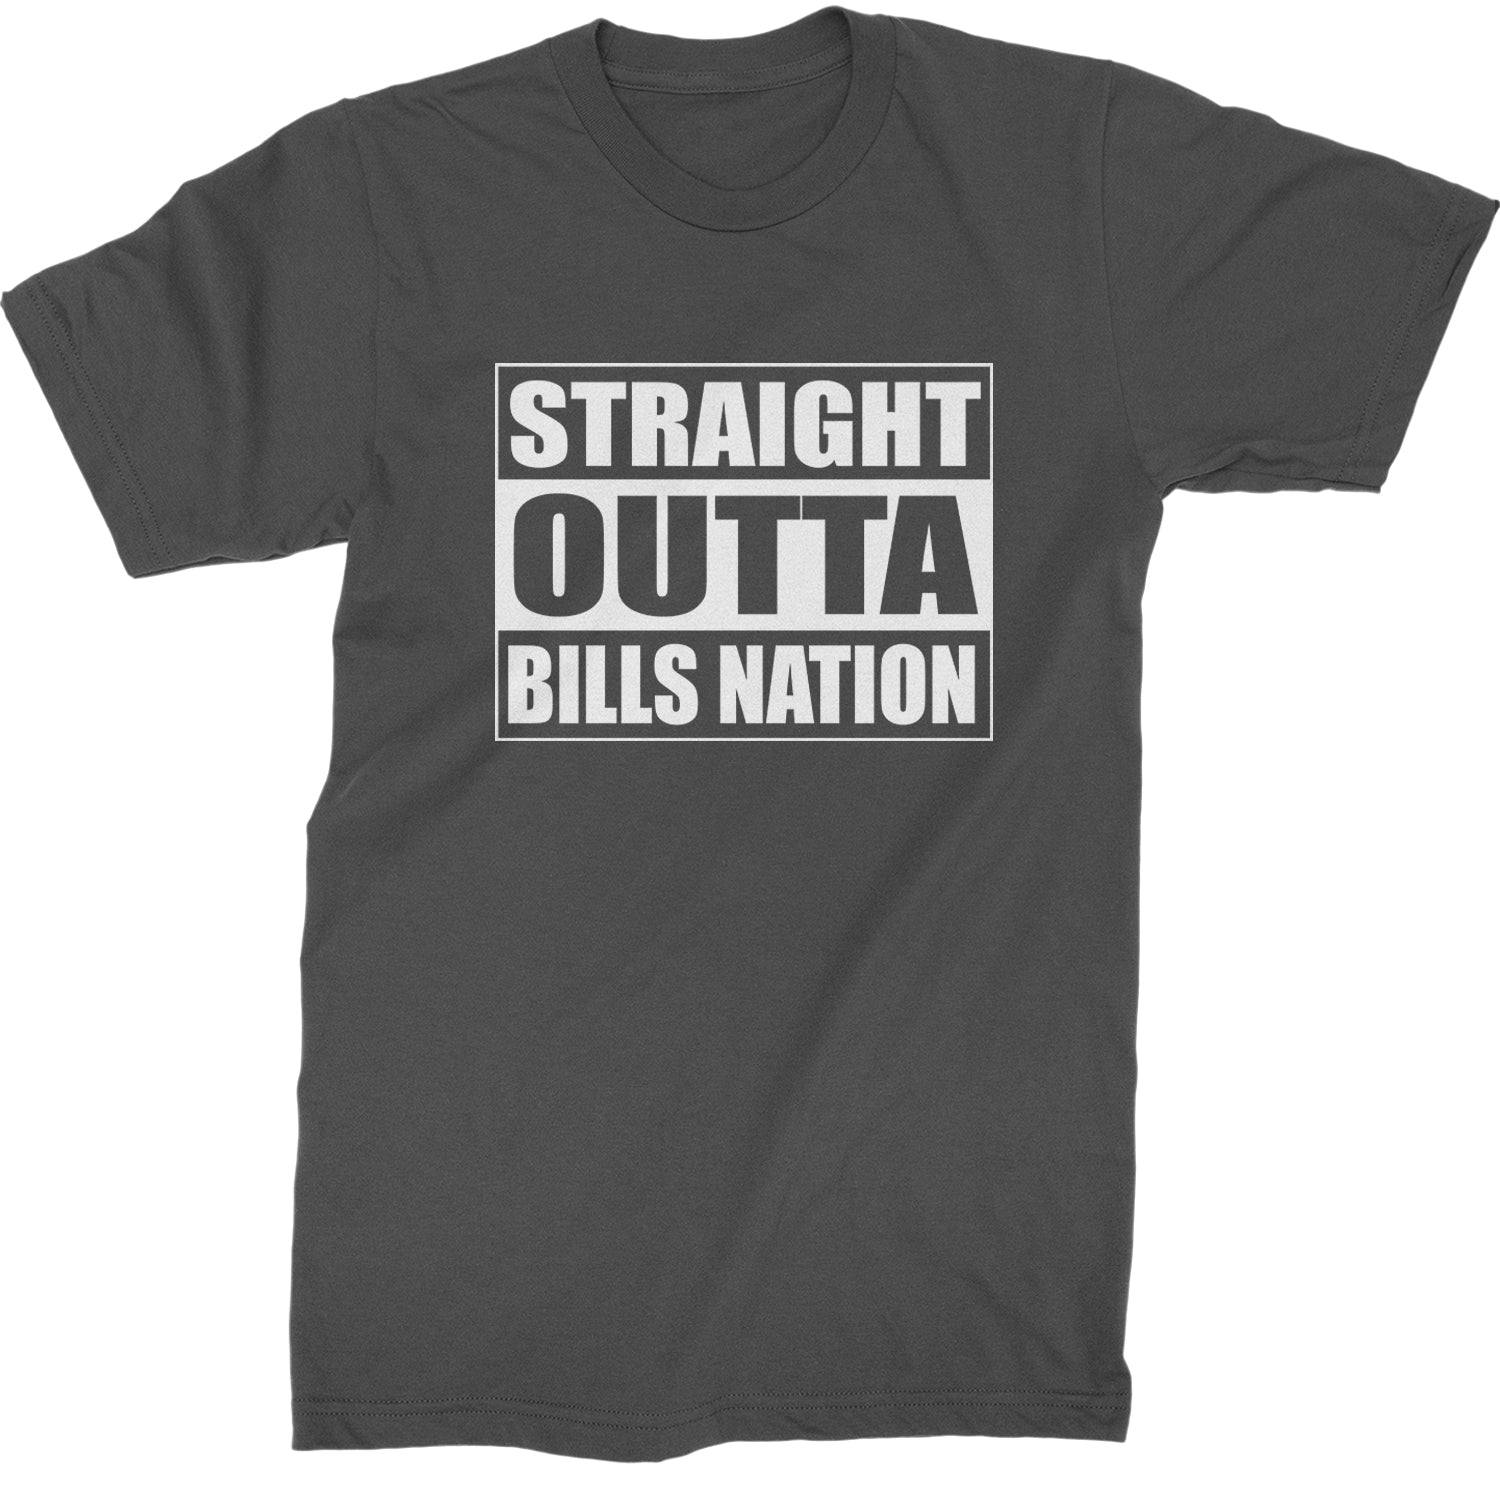 Straight Outta Bills Nation  Mens T-shirt Charcoal Grey